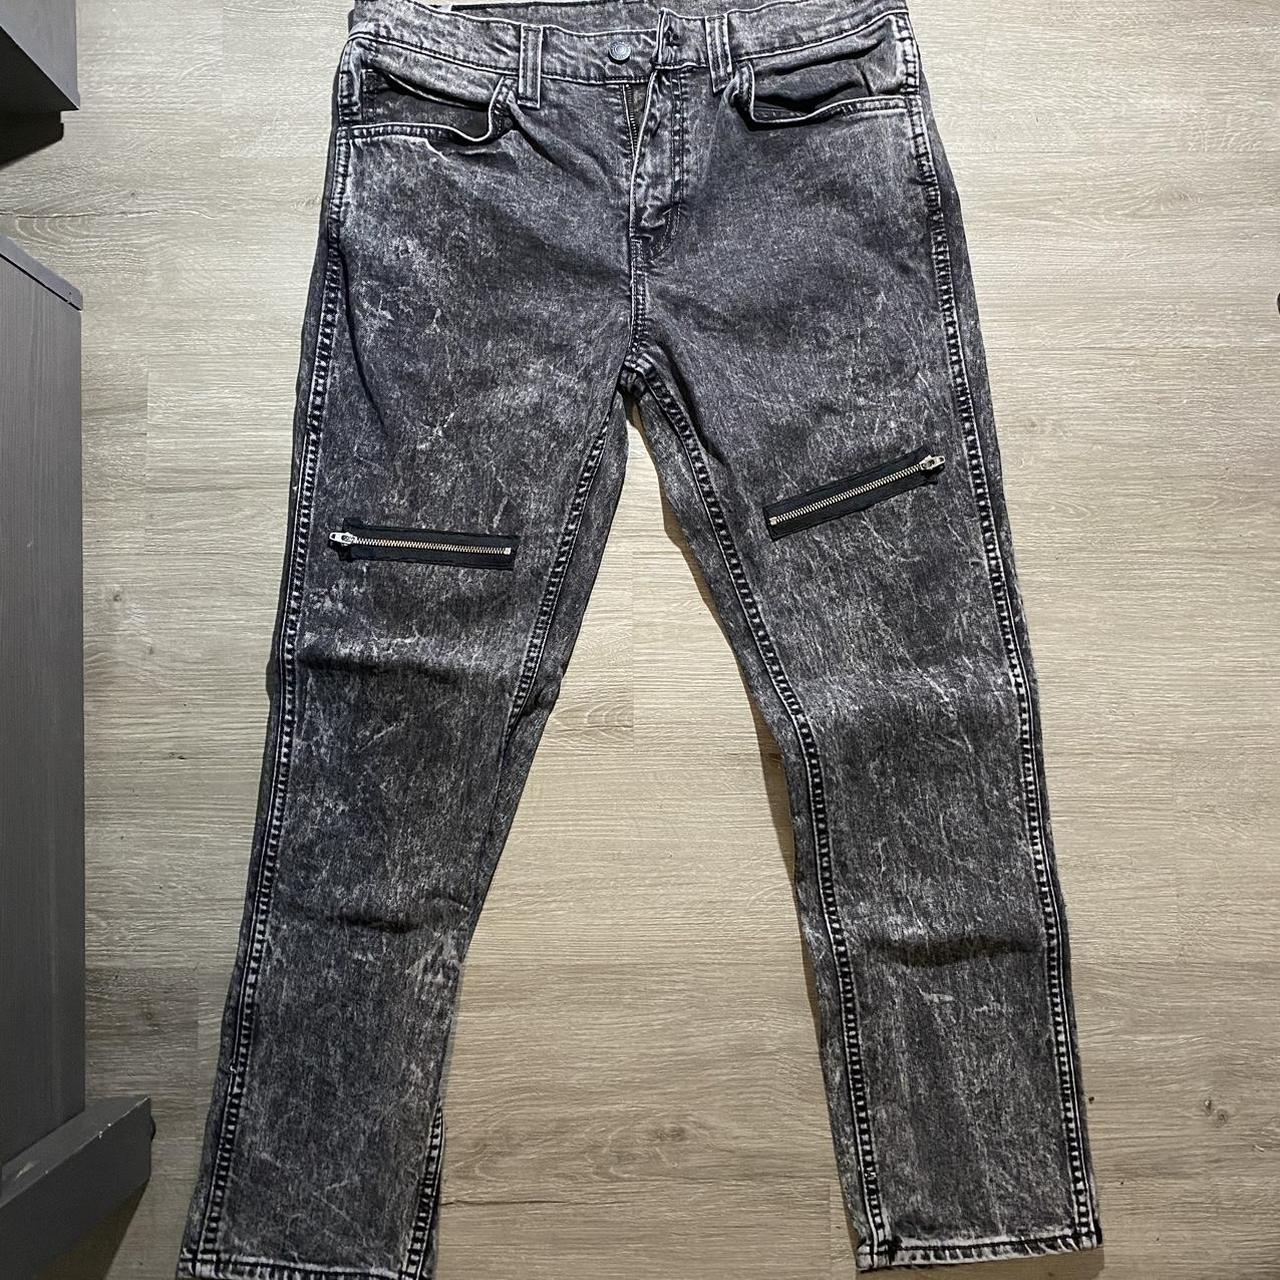 Men's Punk black zipper skinny jeans Zippers have - Depop